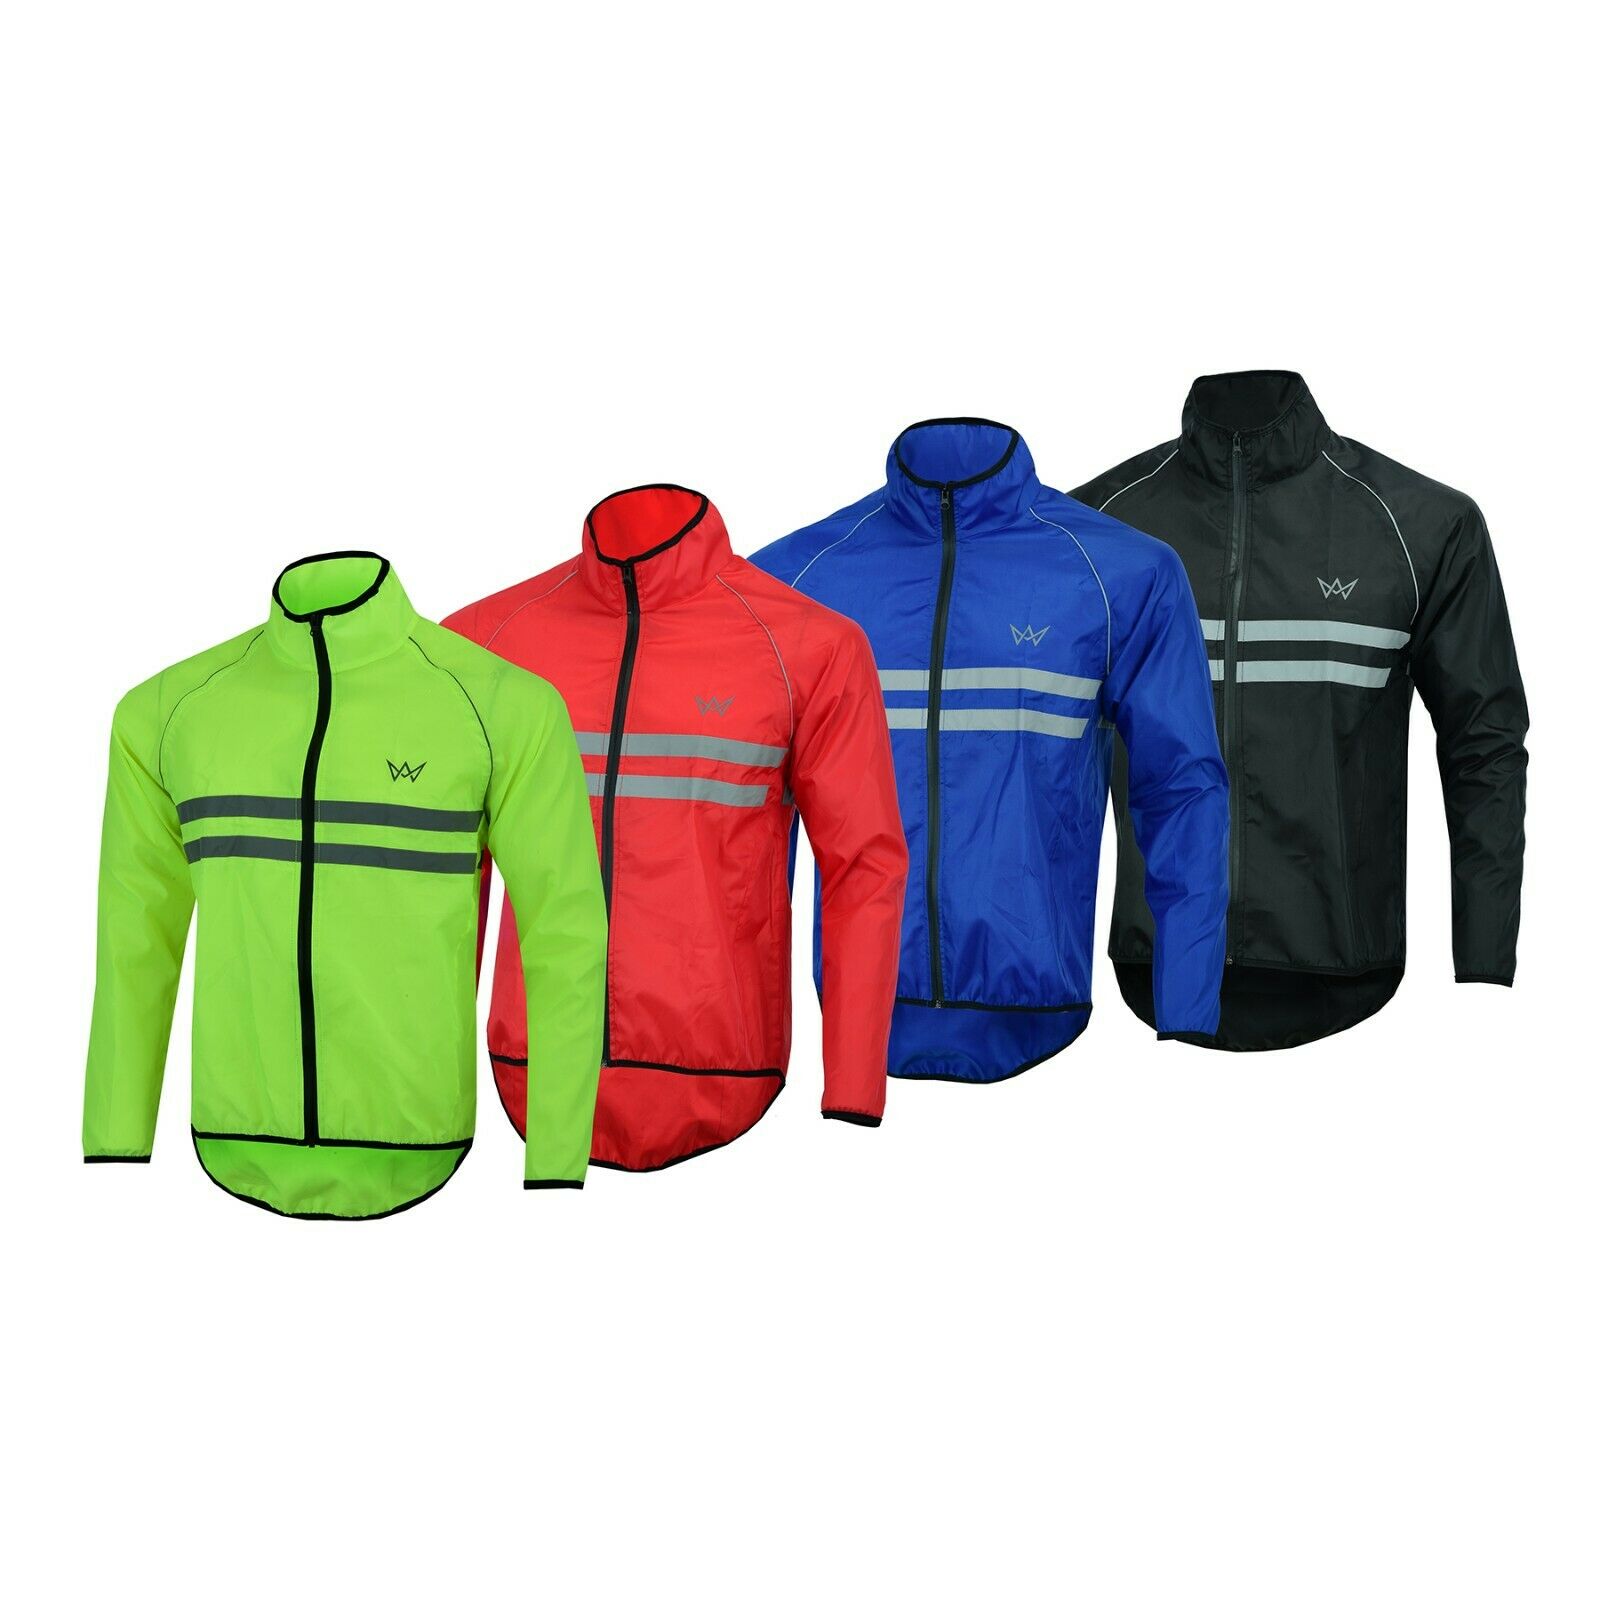 Mens Cycling Jacket High Visibility Waterproof Running Top Rain Coat S To 2xl